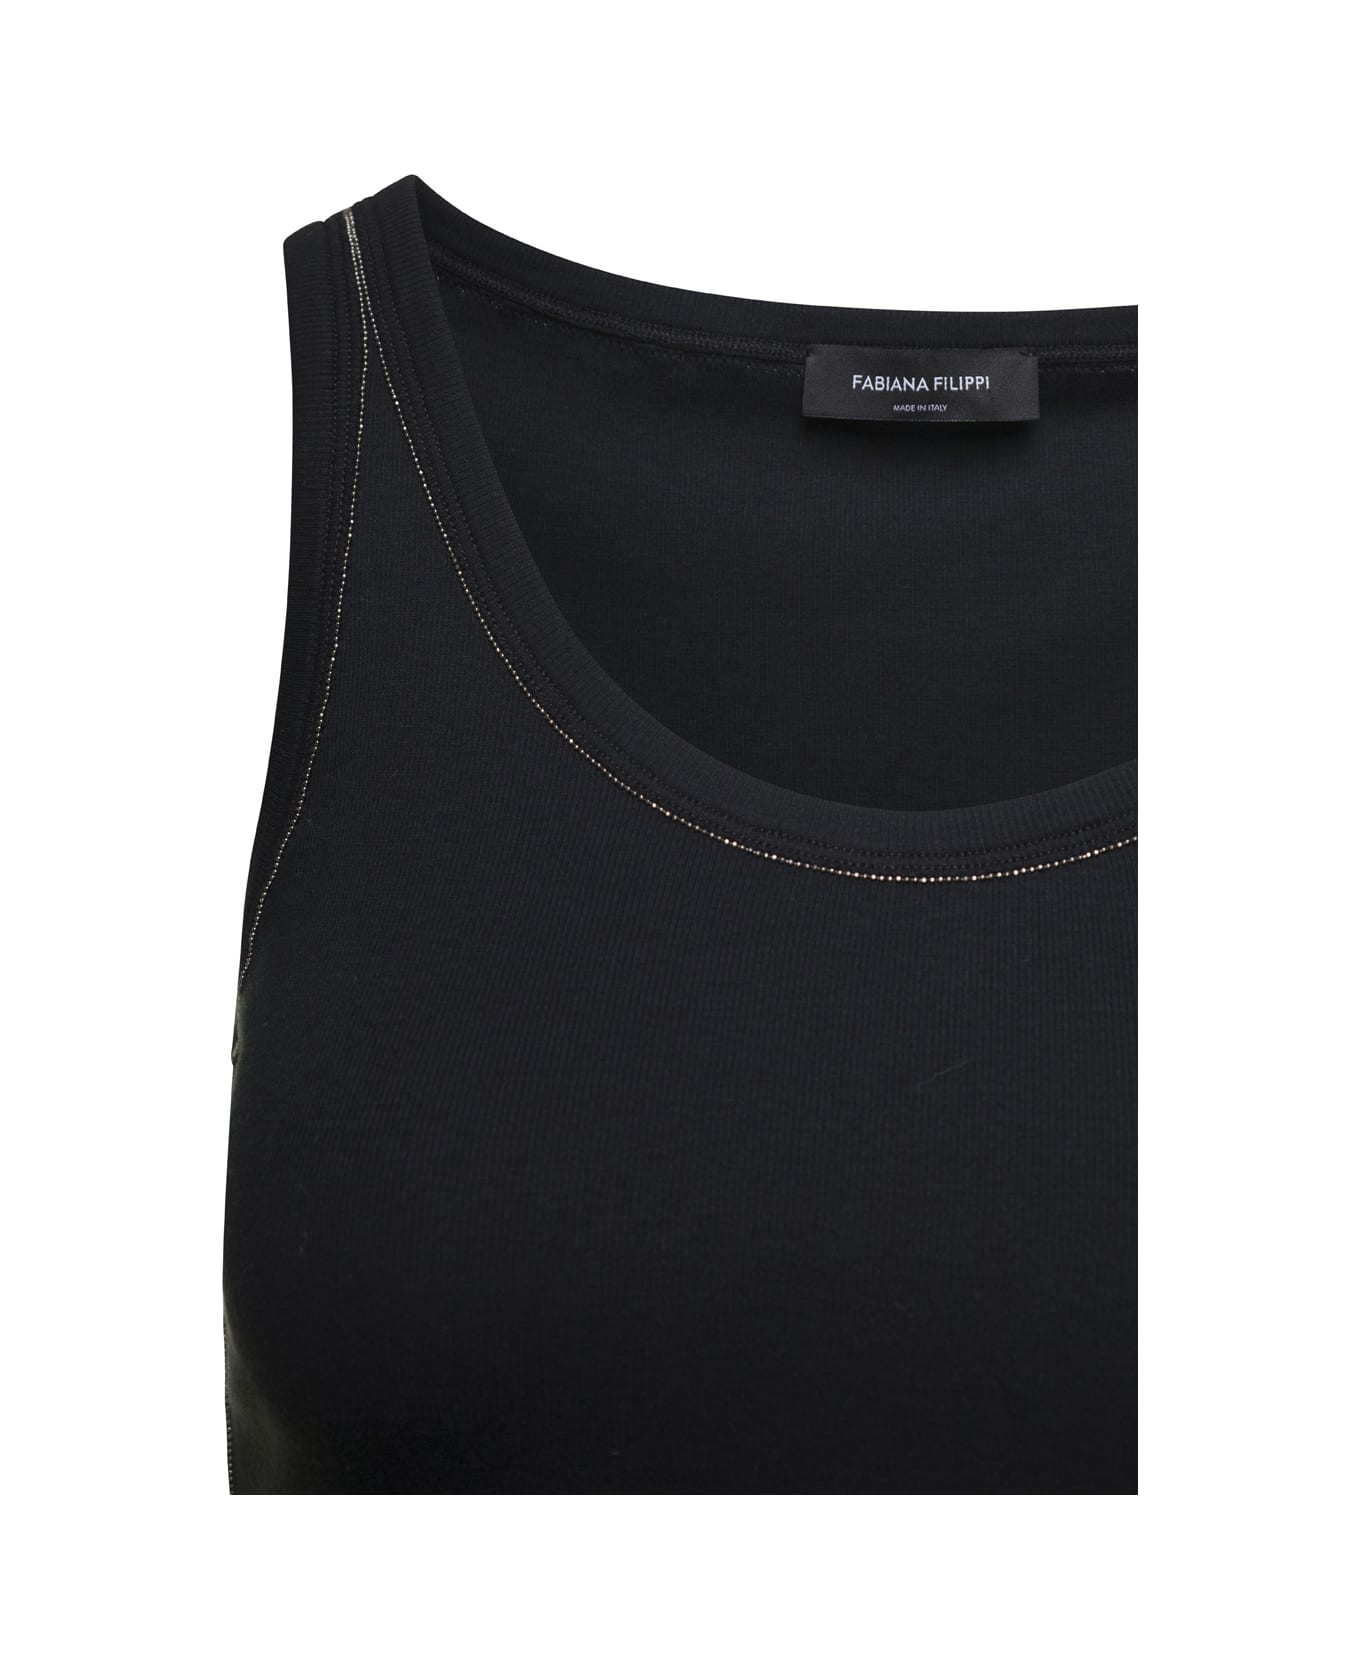 Fabiana Filippi Black Tank Top With Bead-embellishment In Cotton Woman - Black